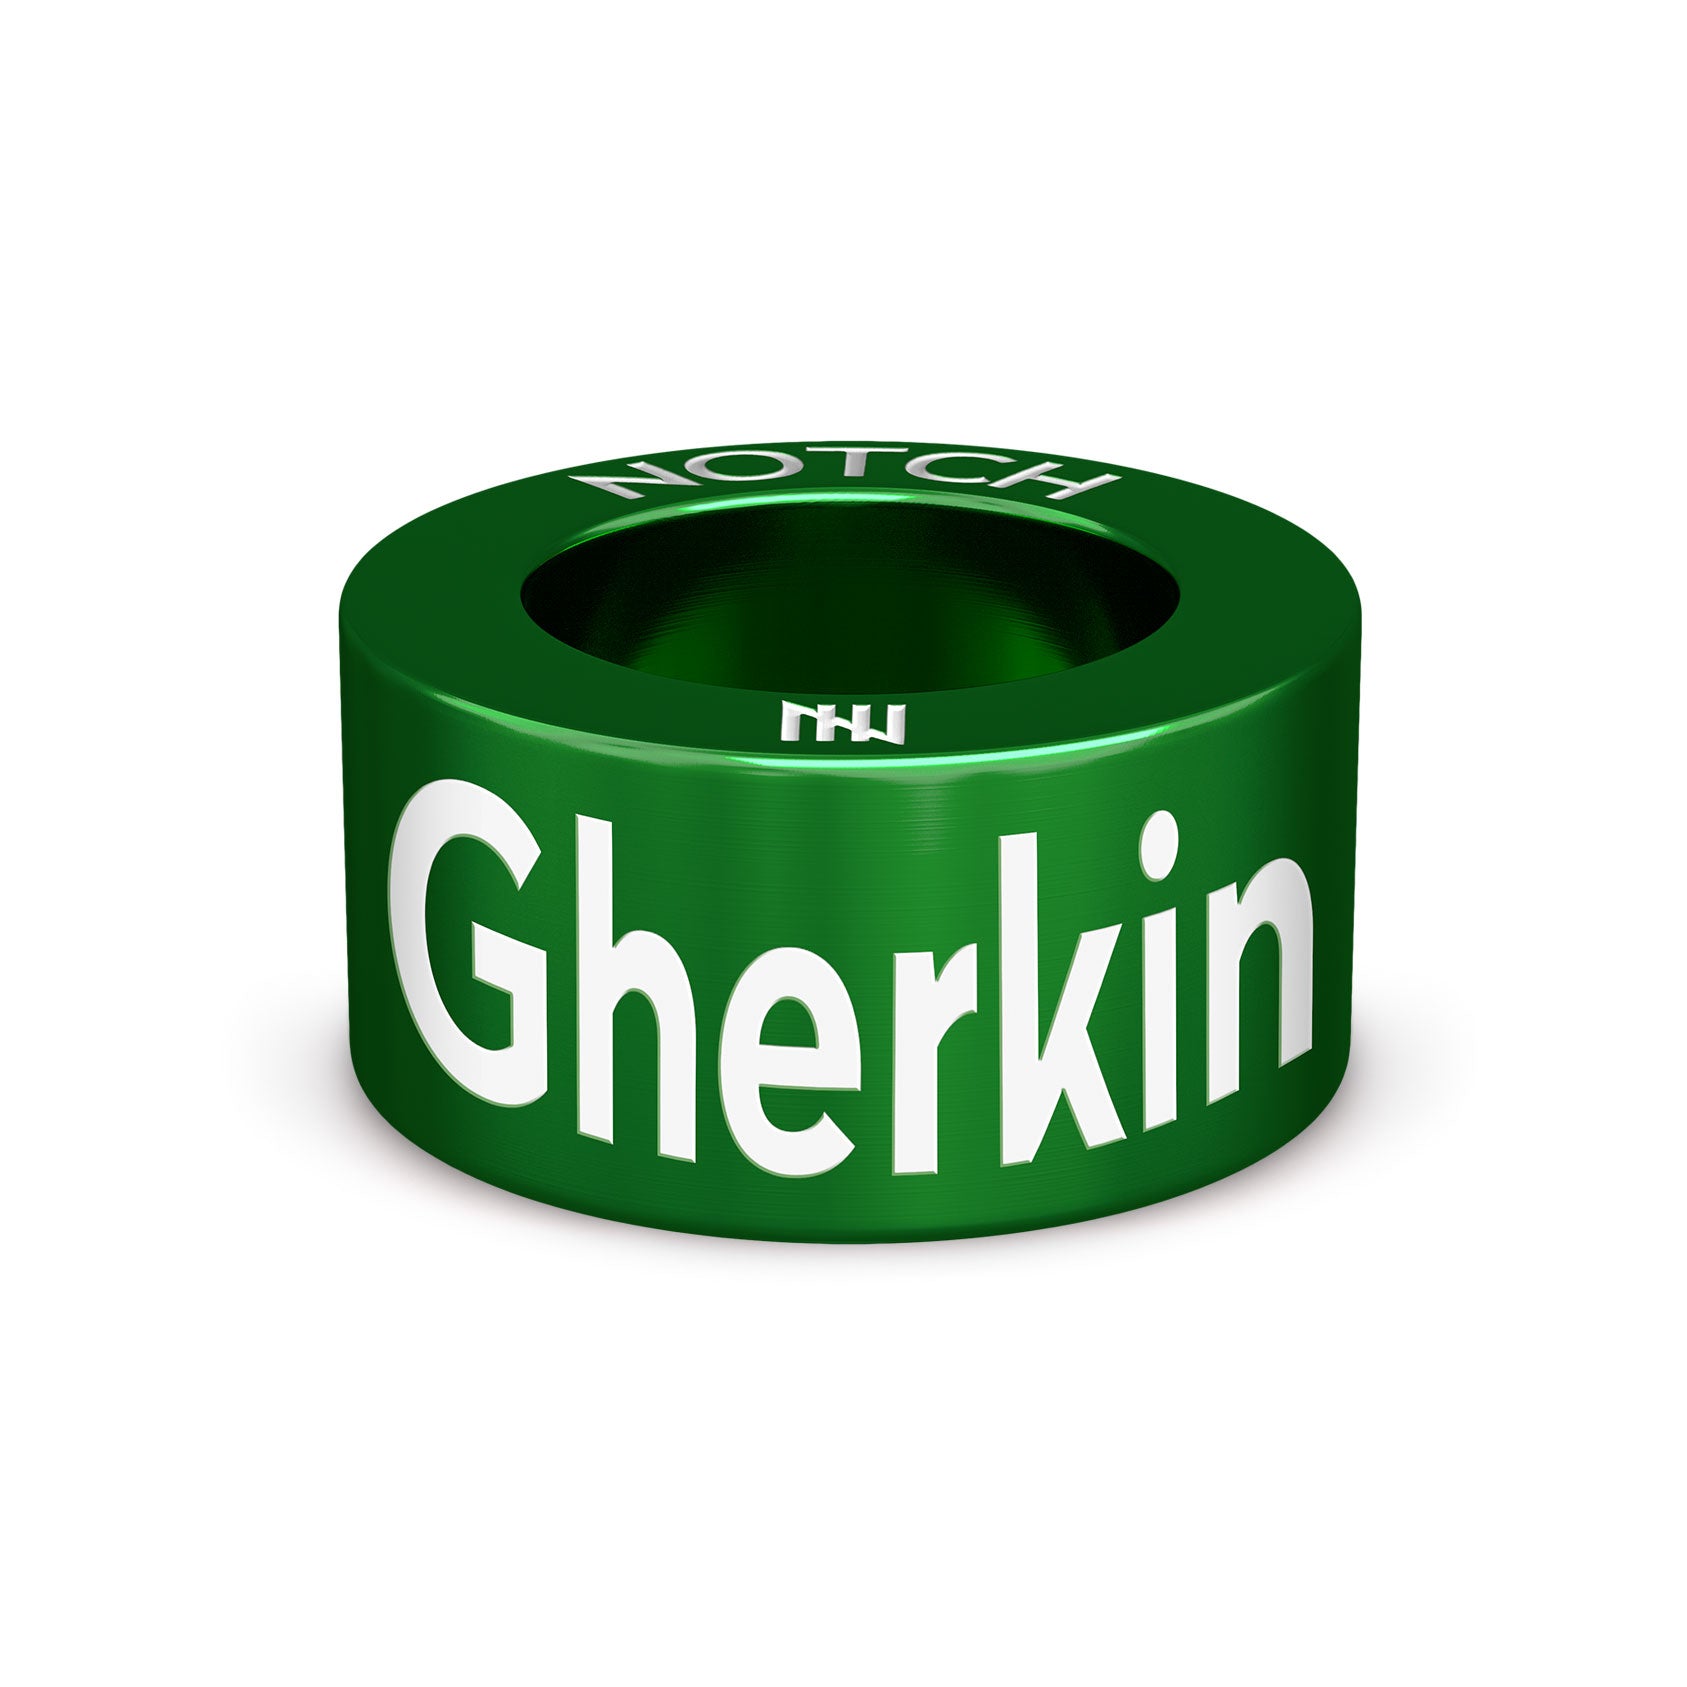 The Gherkin NOTCH Charm